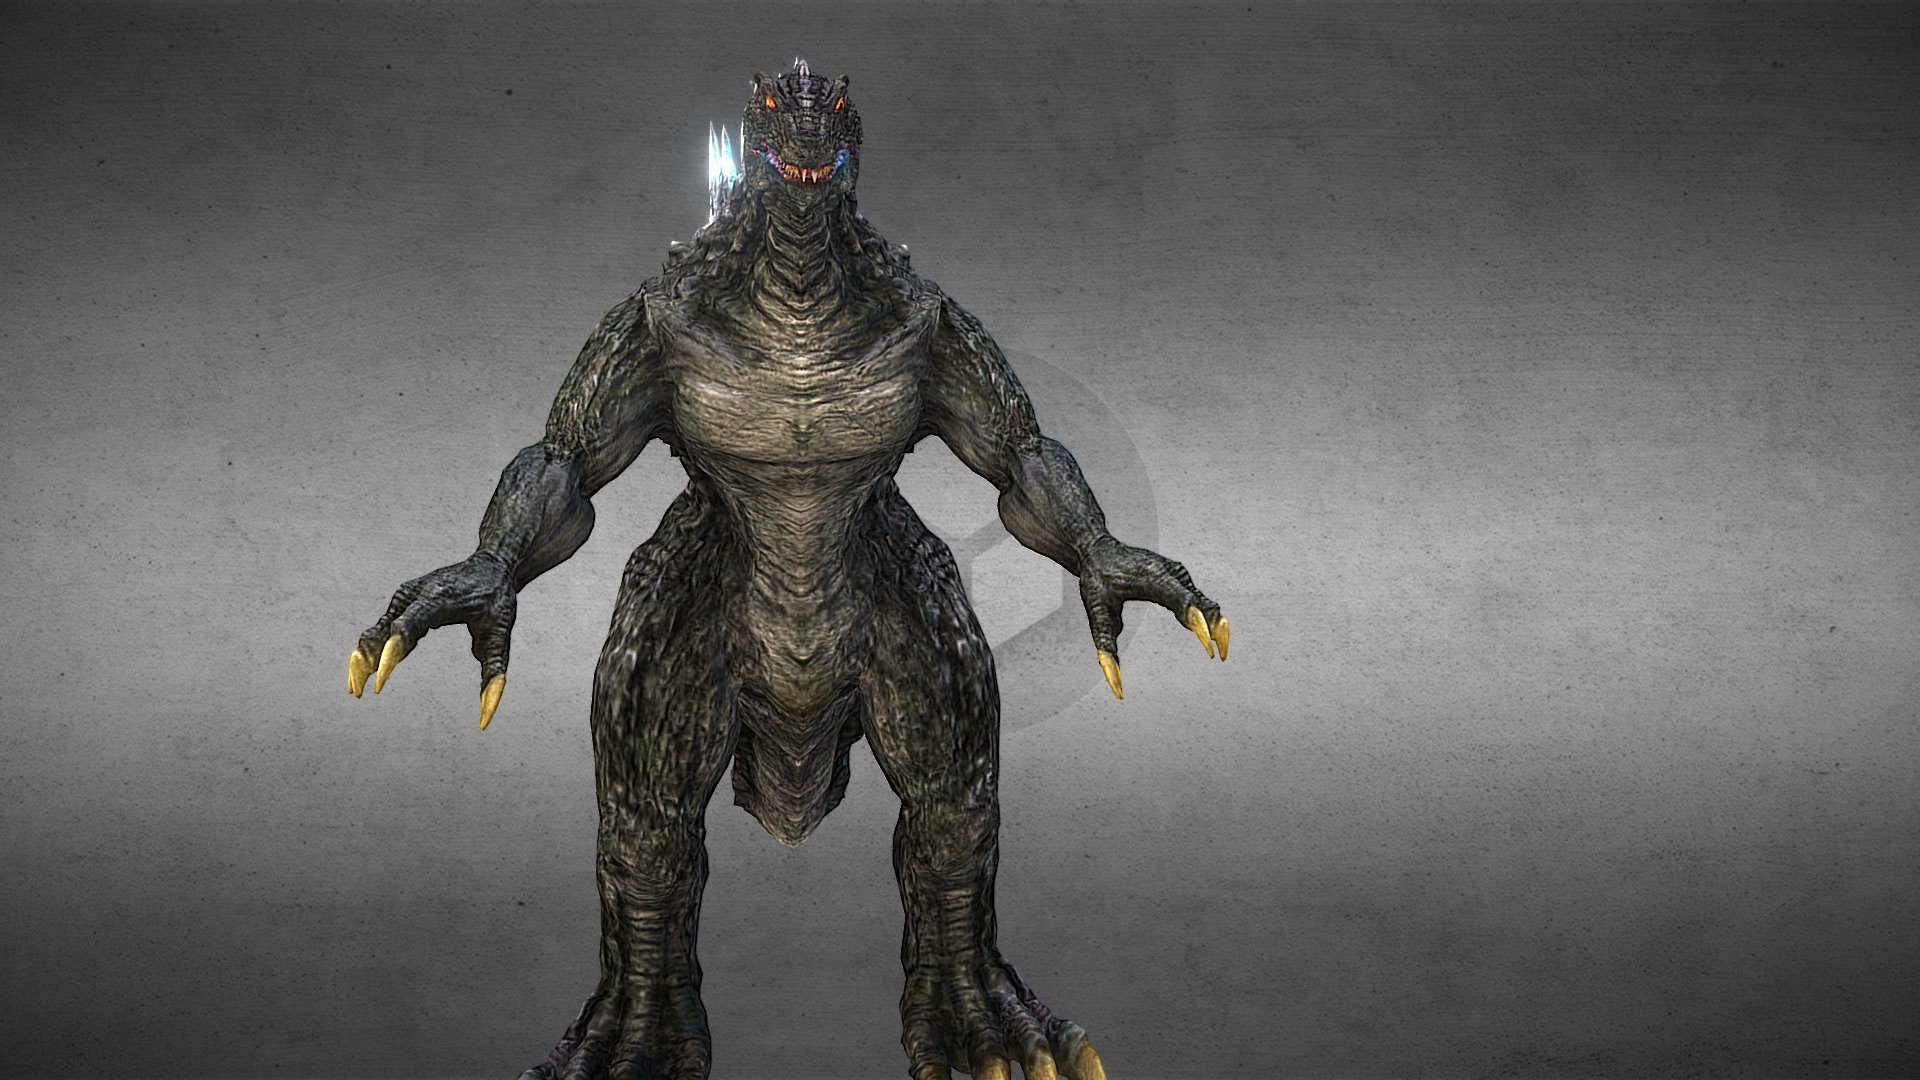 造型偏哥吉拉2000 顏色還是原本初代的灰黑色 - ゴジラ Godzilla 哥吉拉2000 Animation 動畫 - 3D model by s13632112 3d model